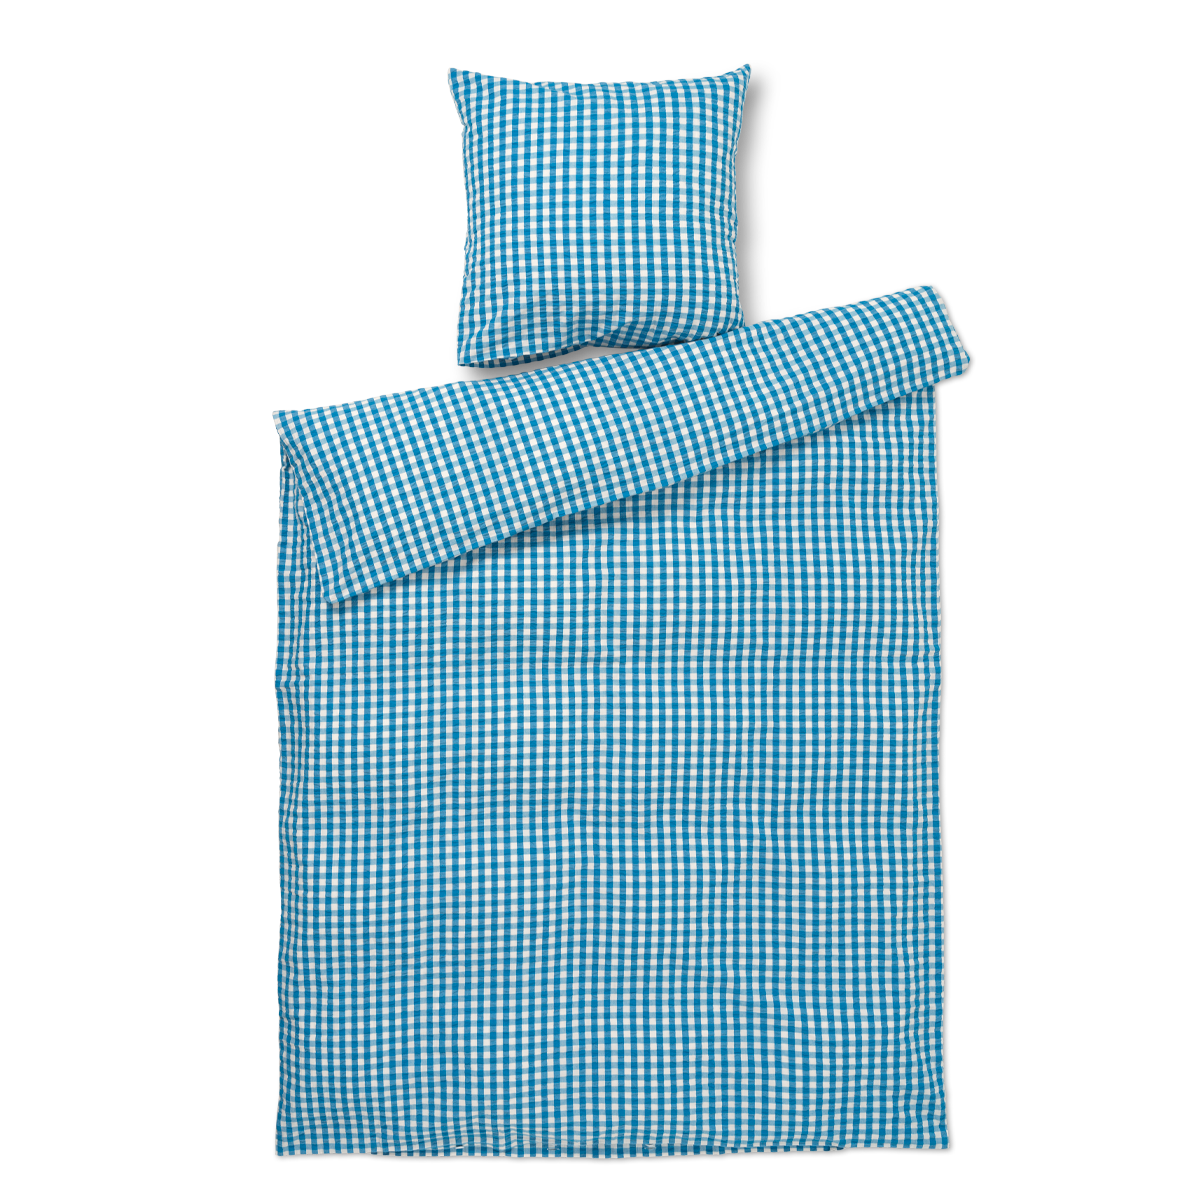 Juna - Organic Bed linen - Crisp  - 140 x 220 cm - Blue